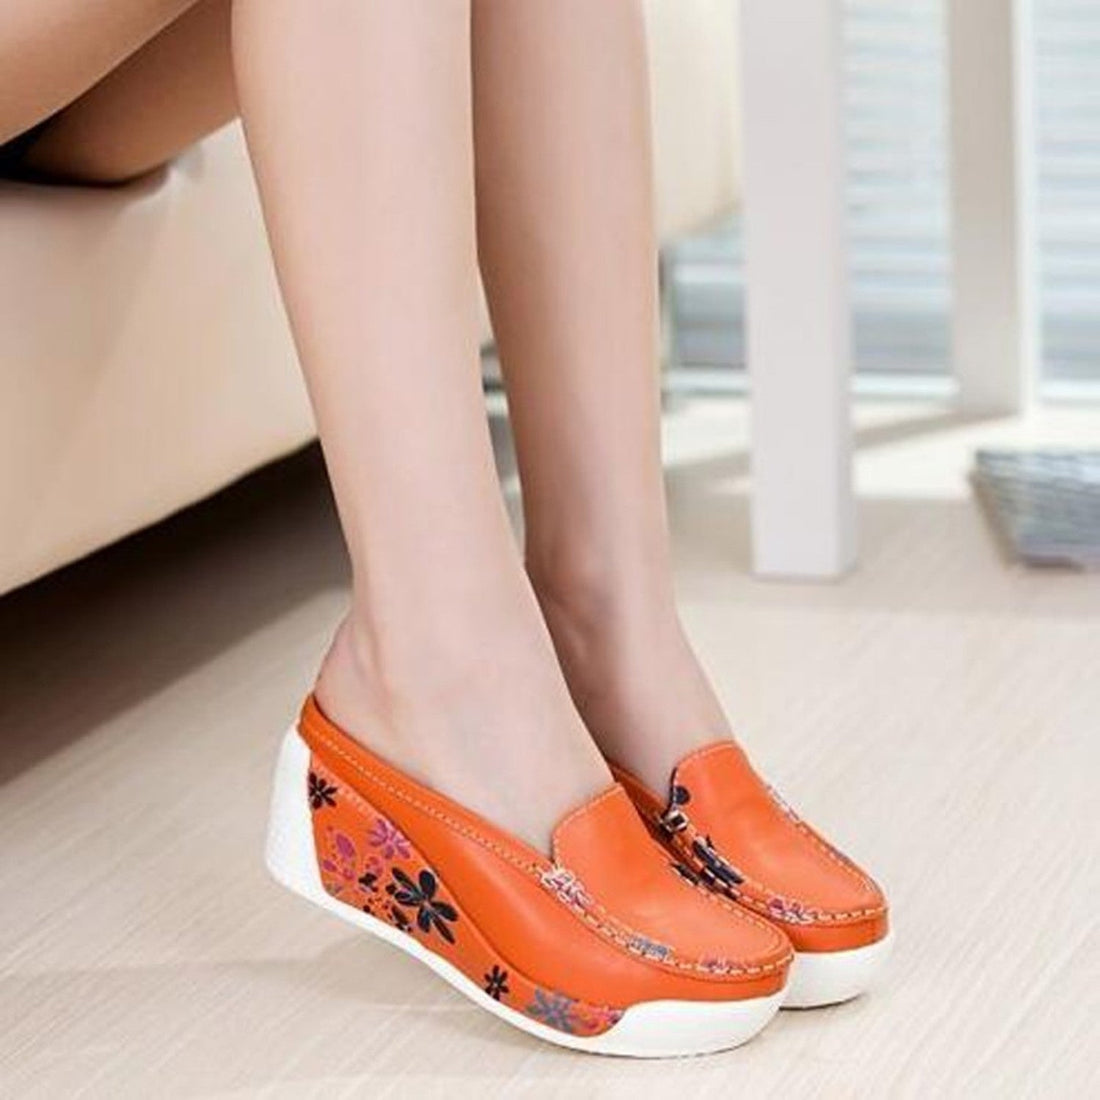 Women's Spring/Summer Platform Shoes With Flower Print